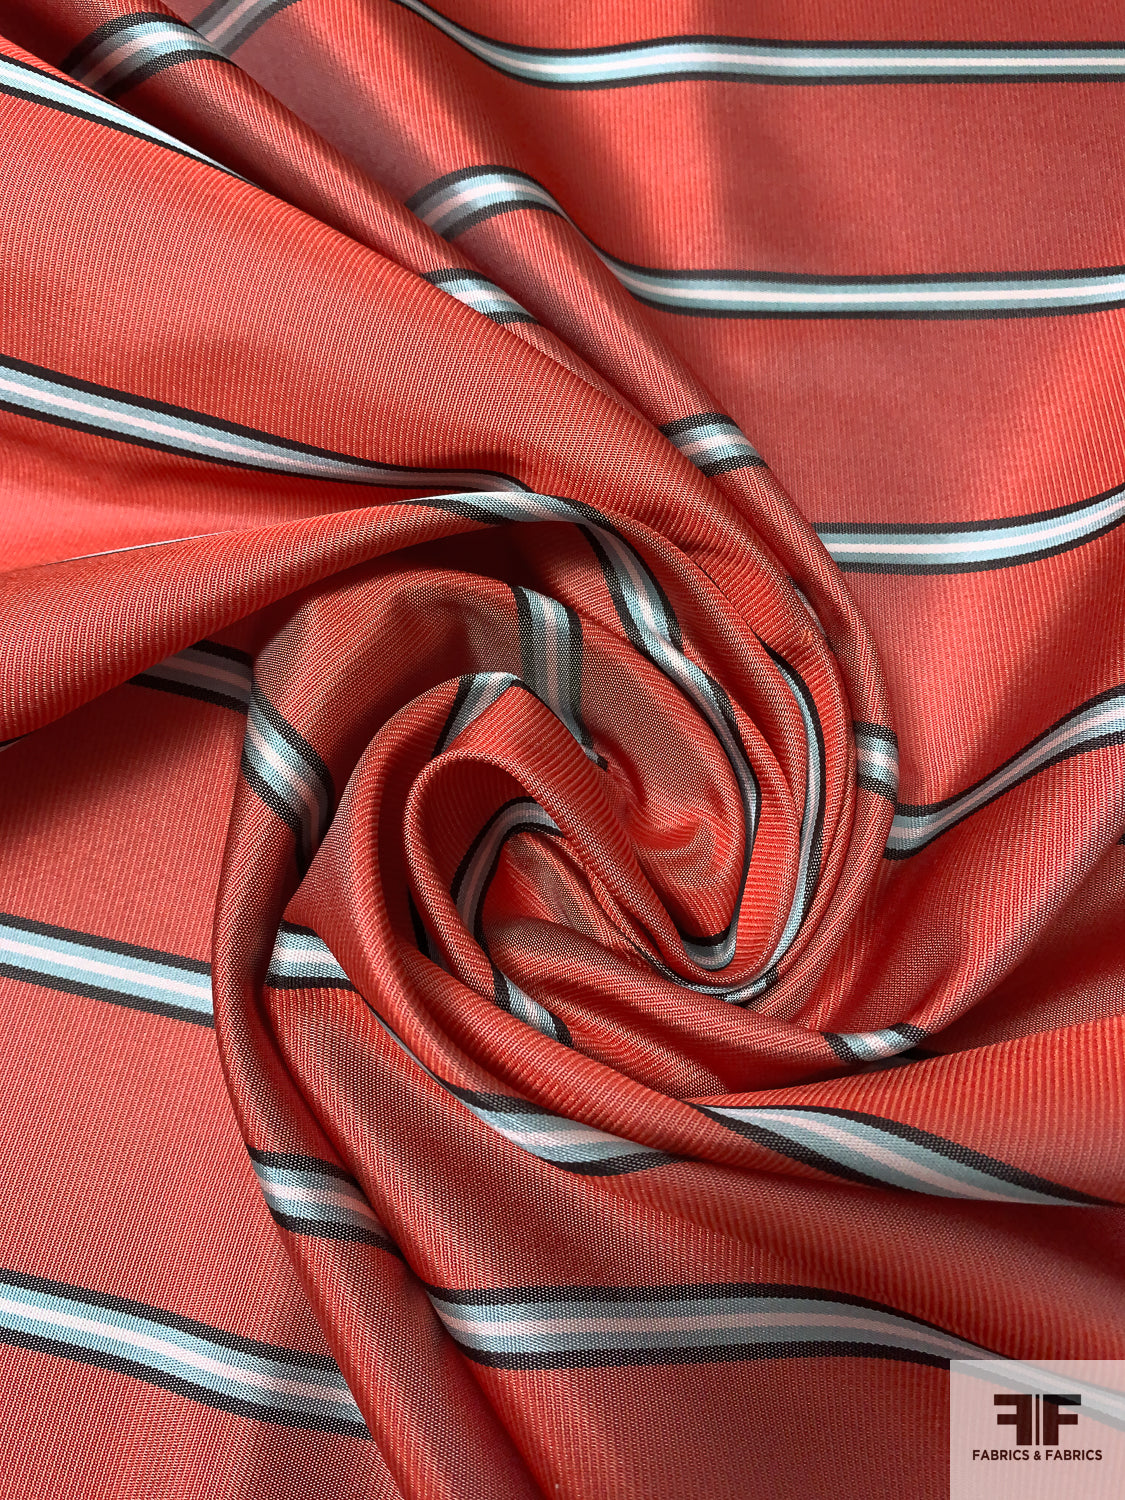 Horizontal Striped Necktie Silk - Hot Coral-Orange / Seafoam / Black / White